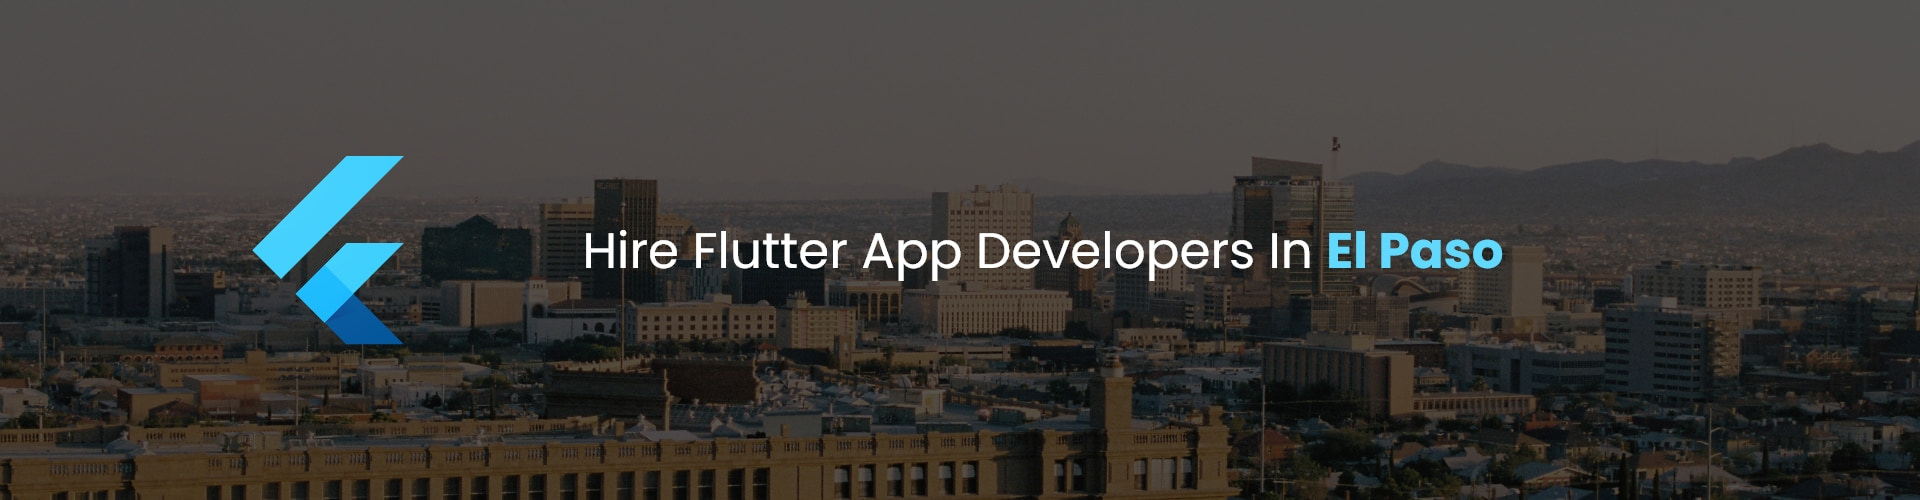 flutter app developers in el paso